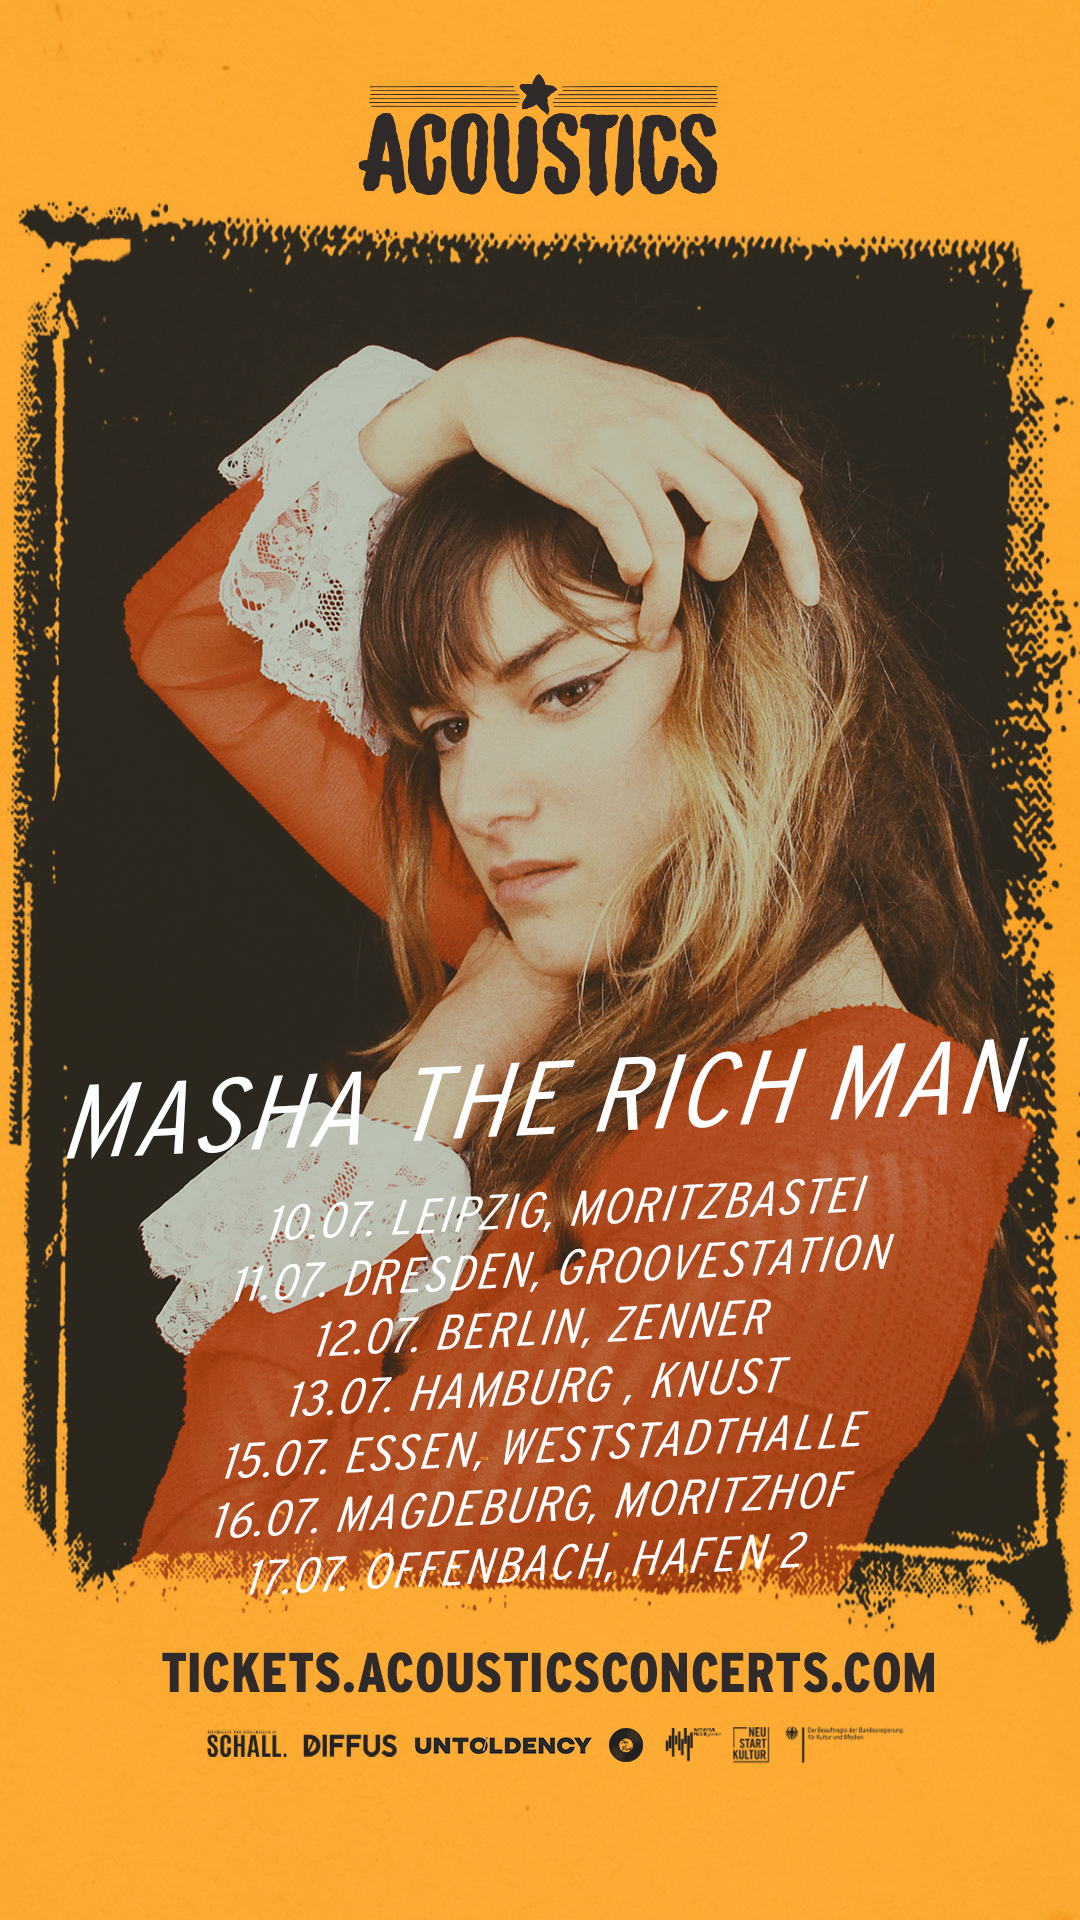 Masha The Rich Man Tour